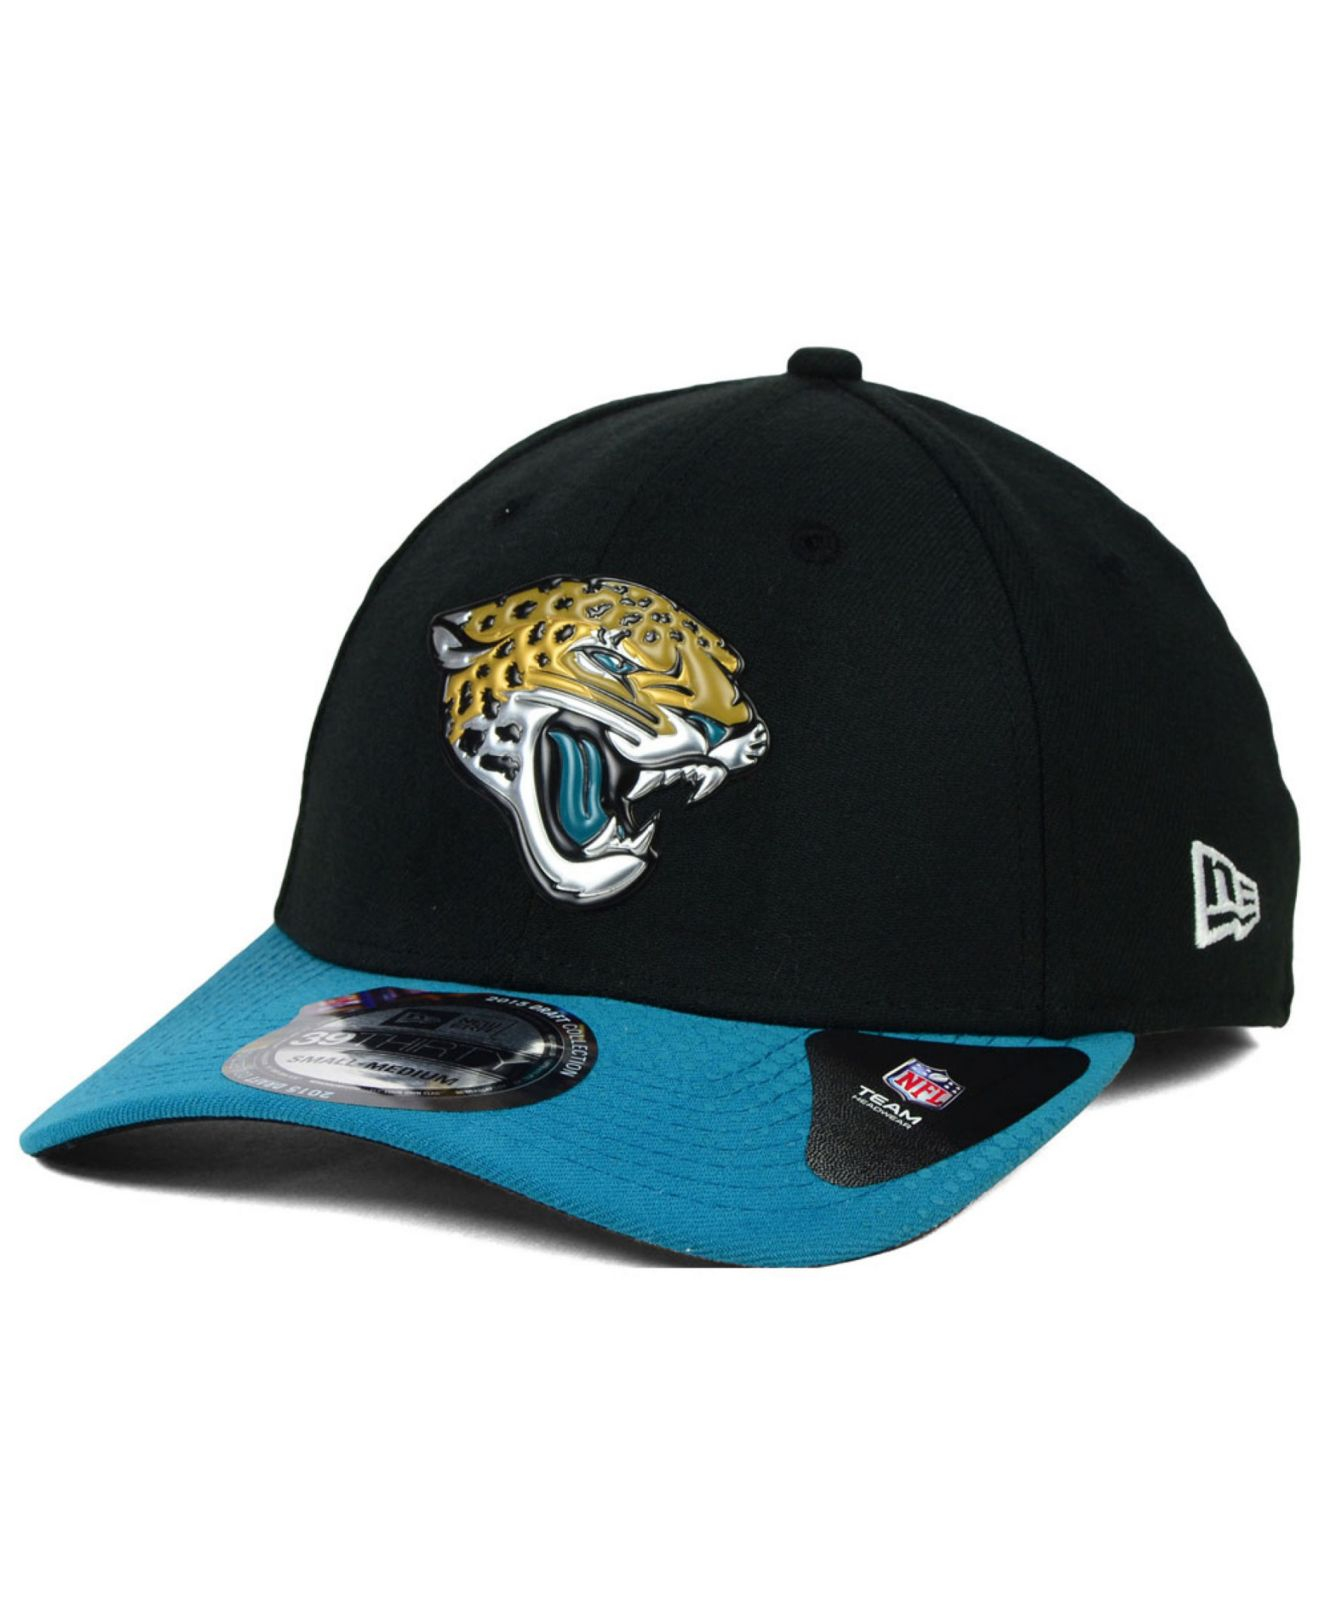 Lyst - Ktz Jacksonville Jaguars 2015 Nfl Draft 39Thirty Cap in Black ...